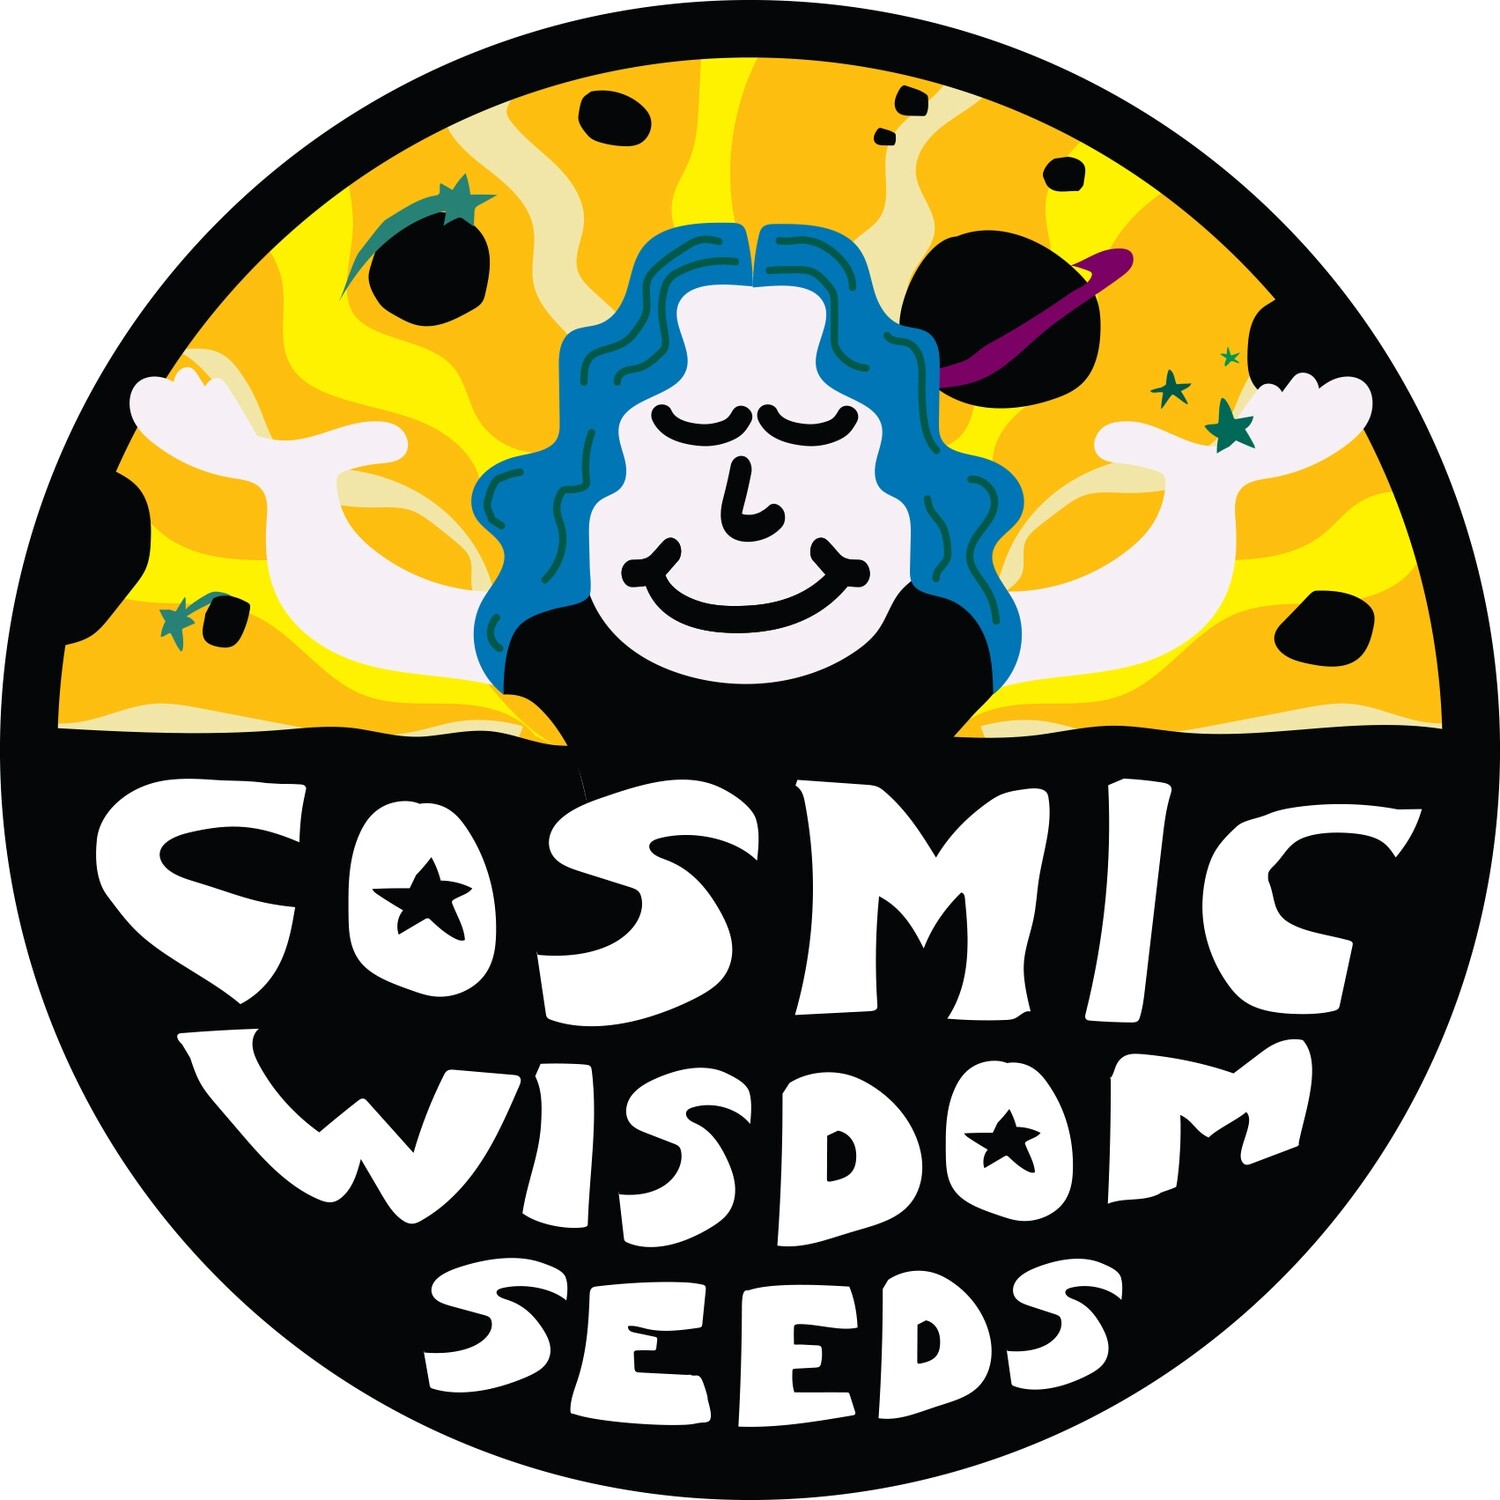 Mango Haze x Purple Hindu Kush M10 - *Untested Pre-Release* - 10 Regular Seeds - Cosmic Wisdom Seeds